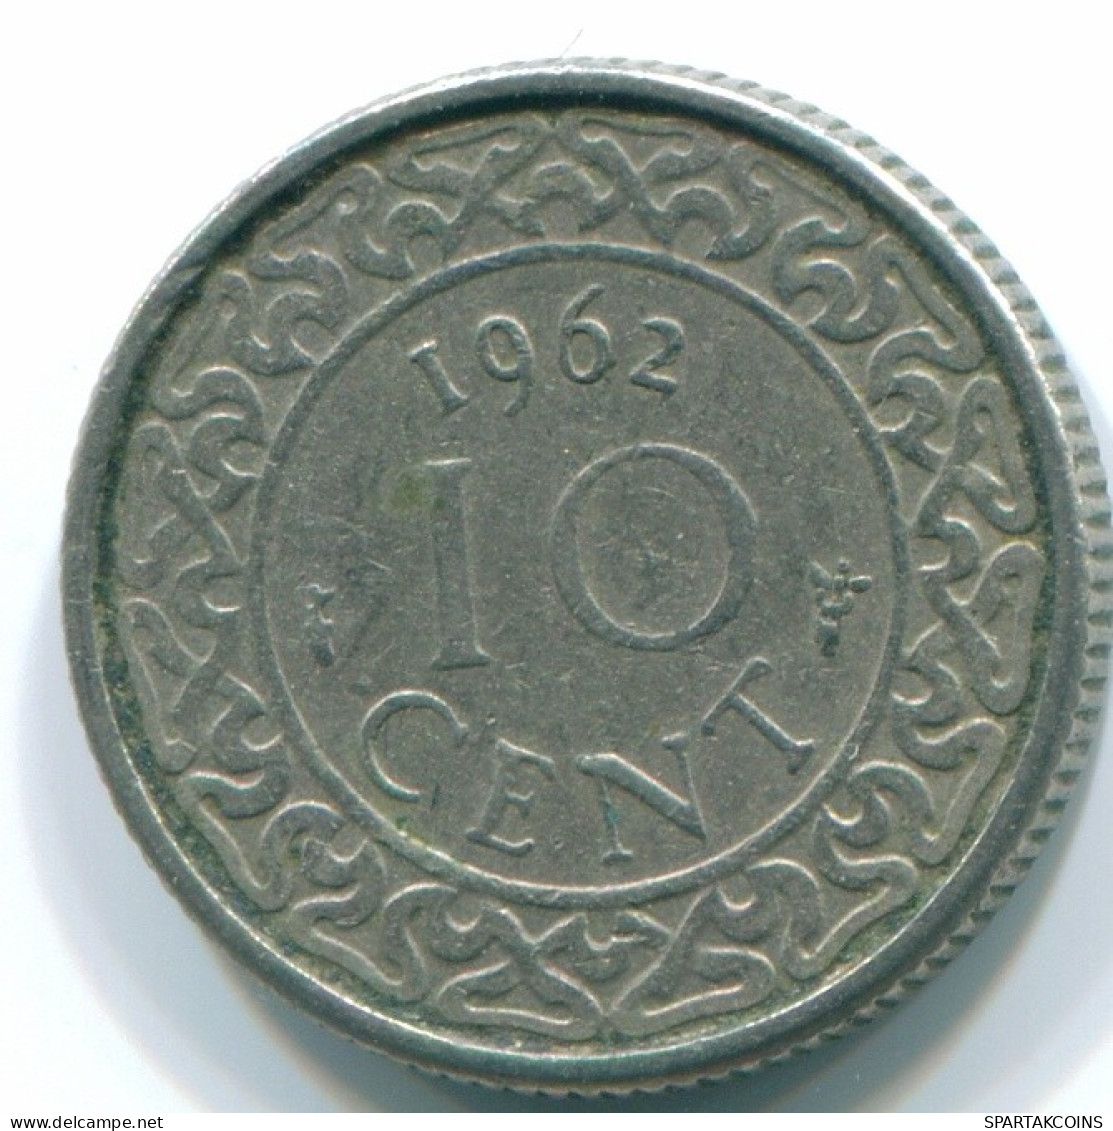 10 CENTS 1962 SURINAME Netherlands Nickel Colonial Coin #S13185.U.A - Surinam 1975 - ...